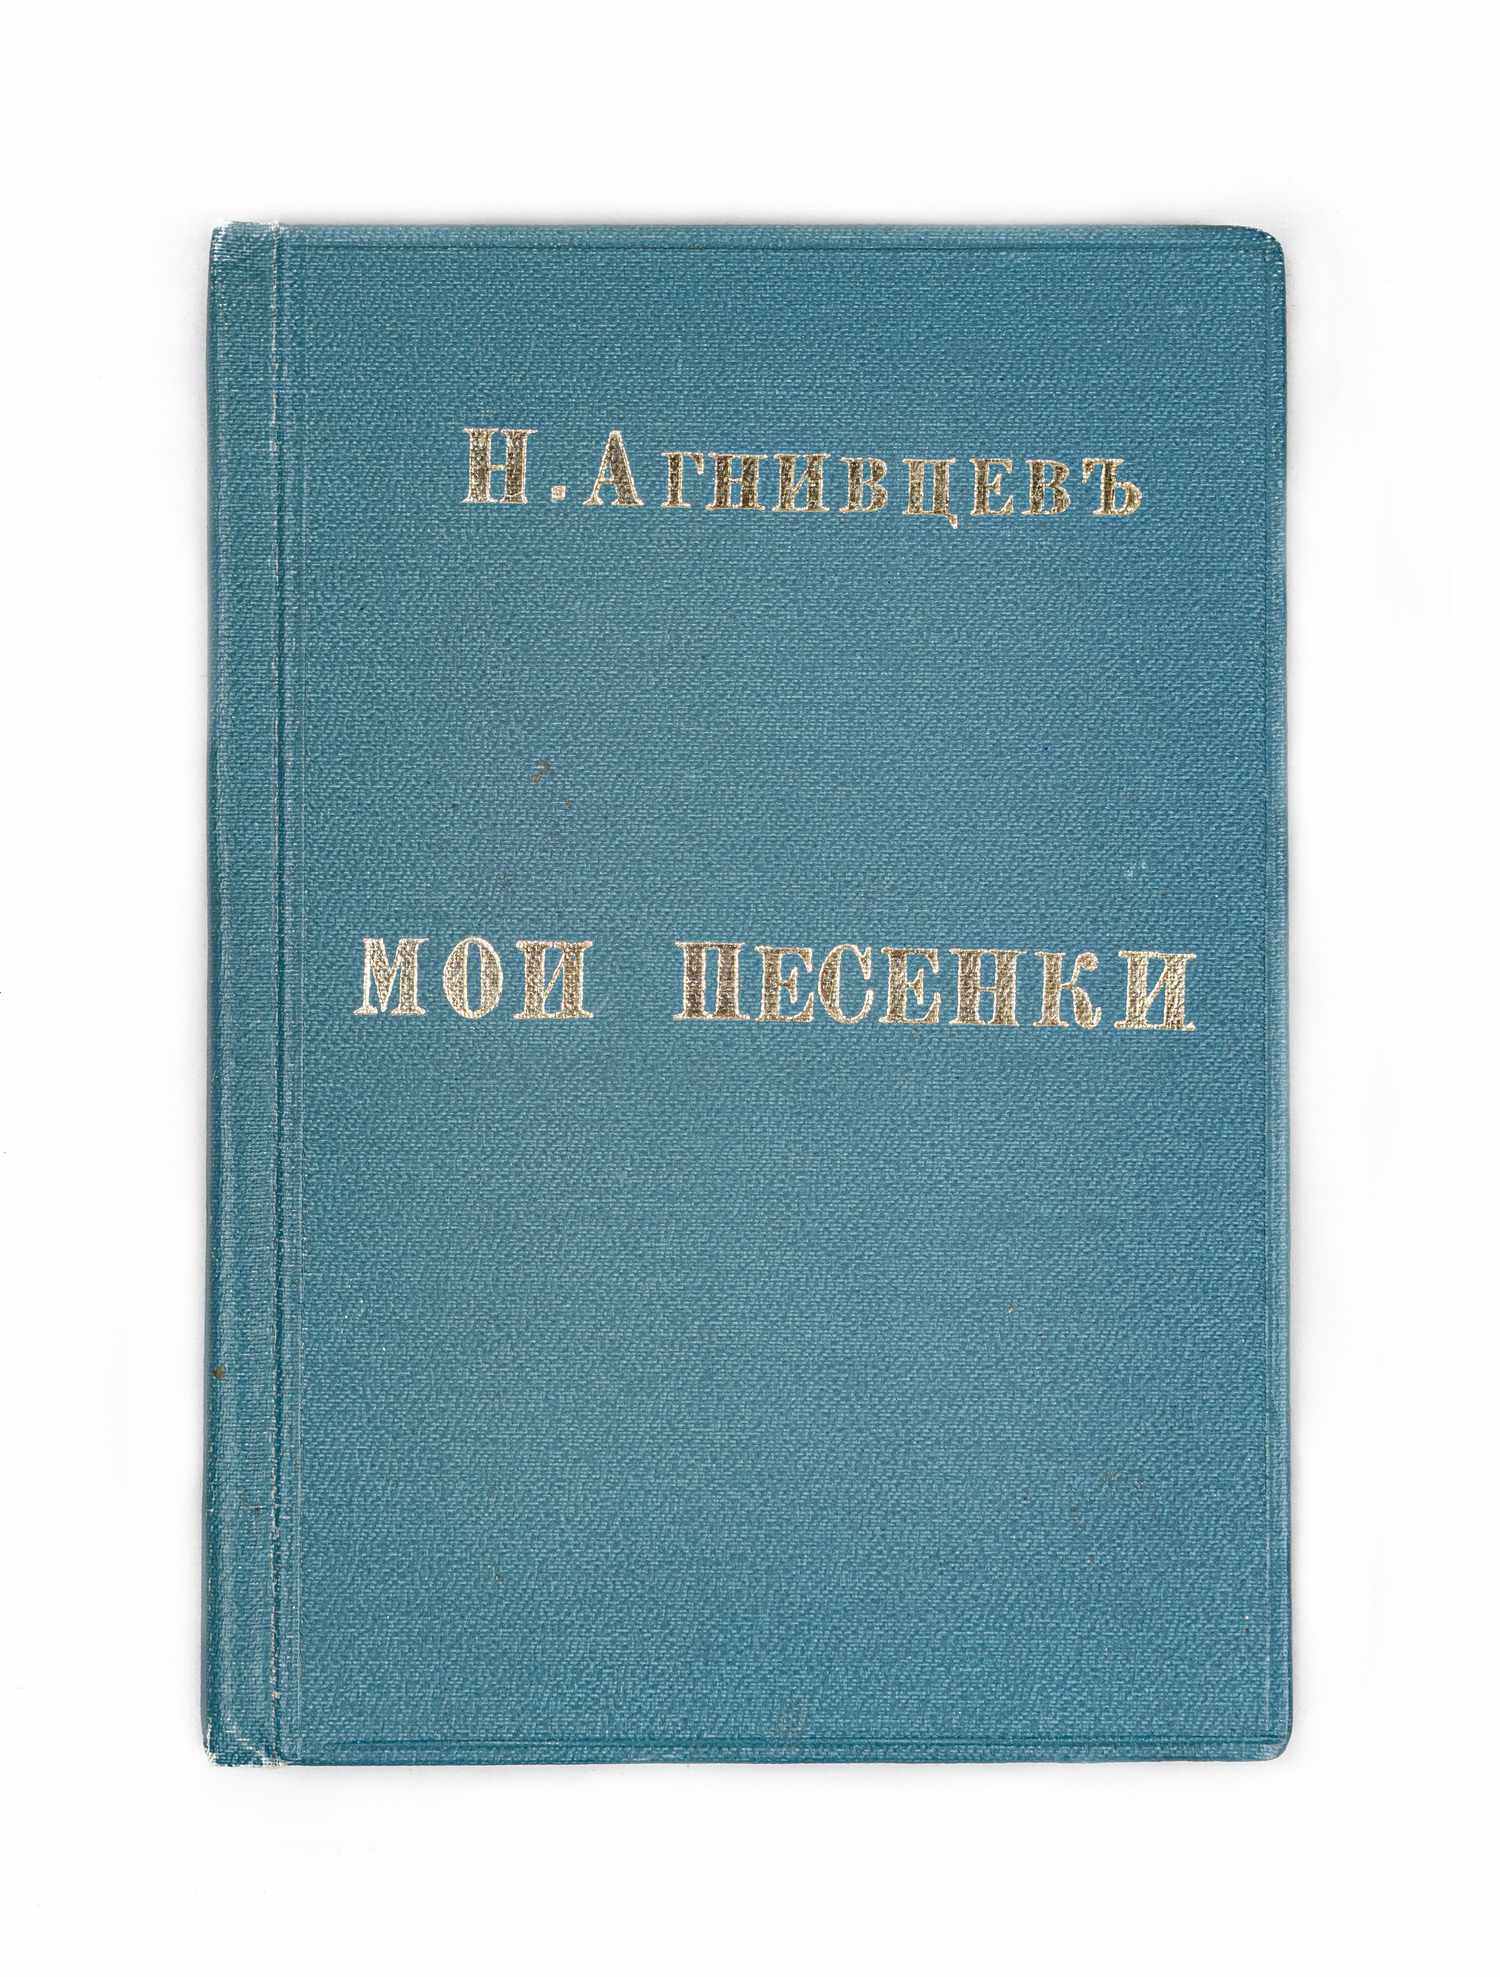 Агнивцев Н. Мои песенки (Берлин, 1921).